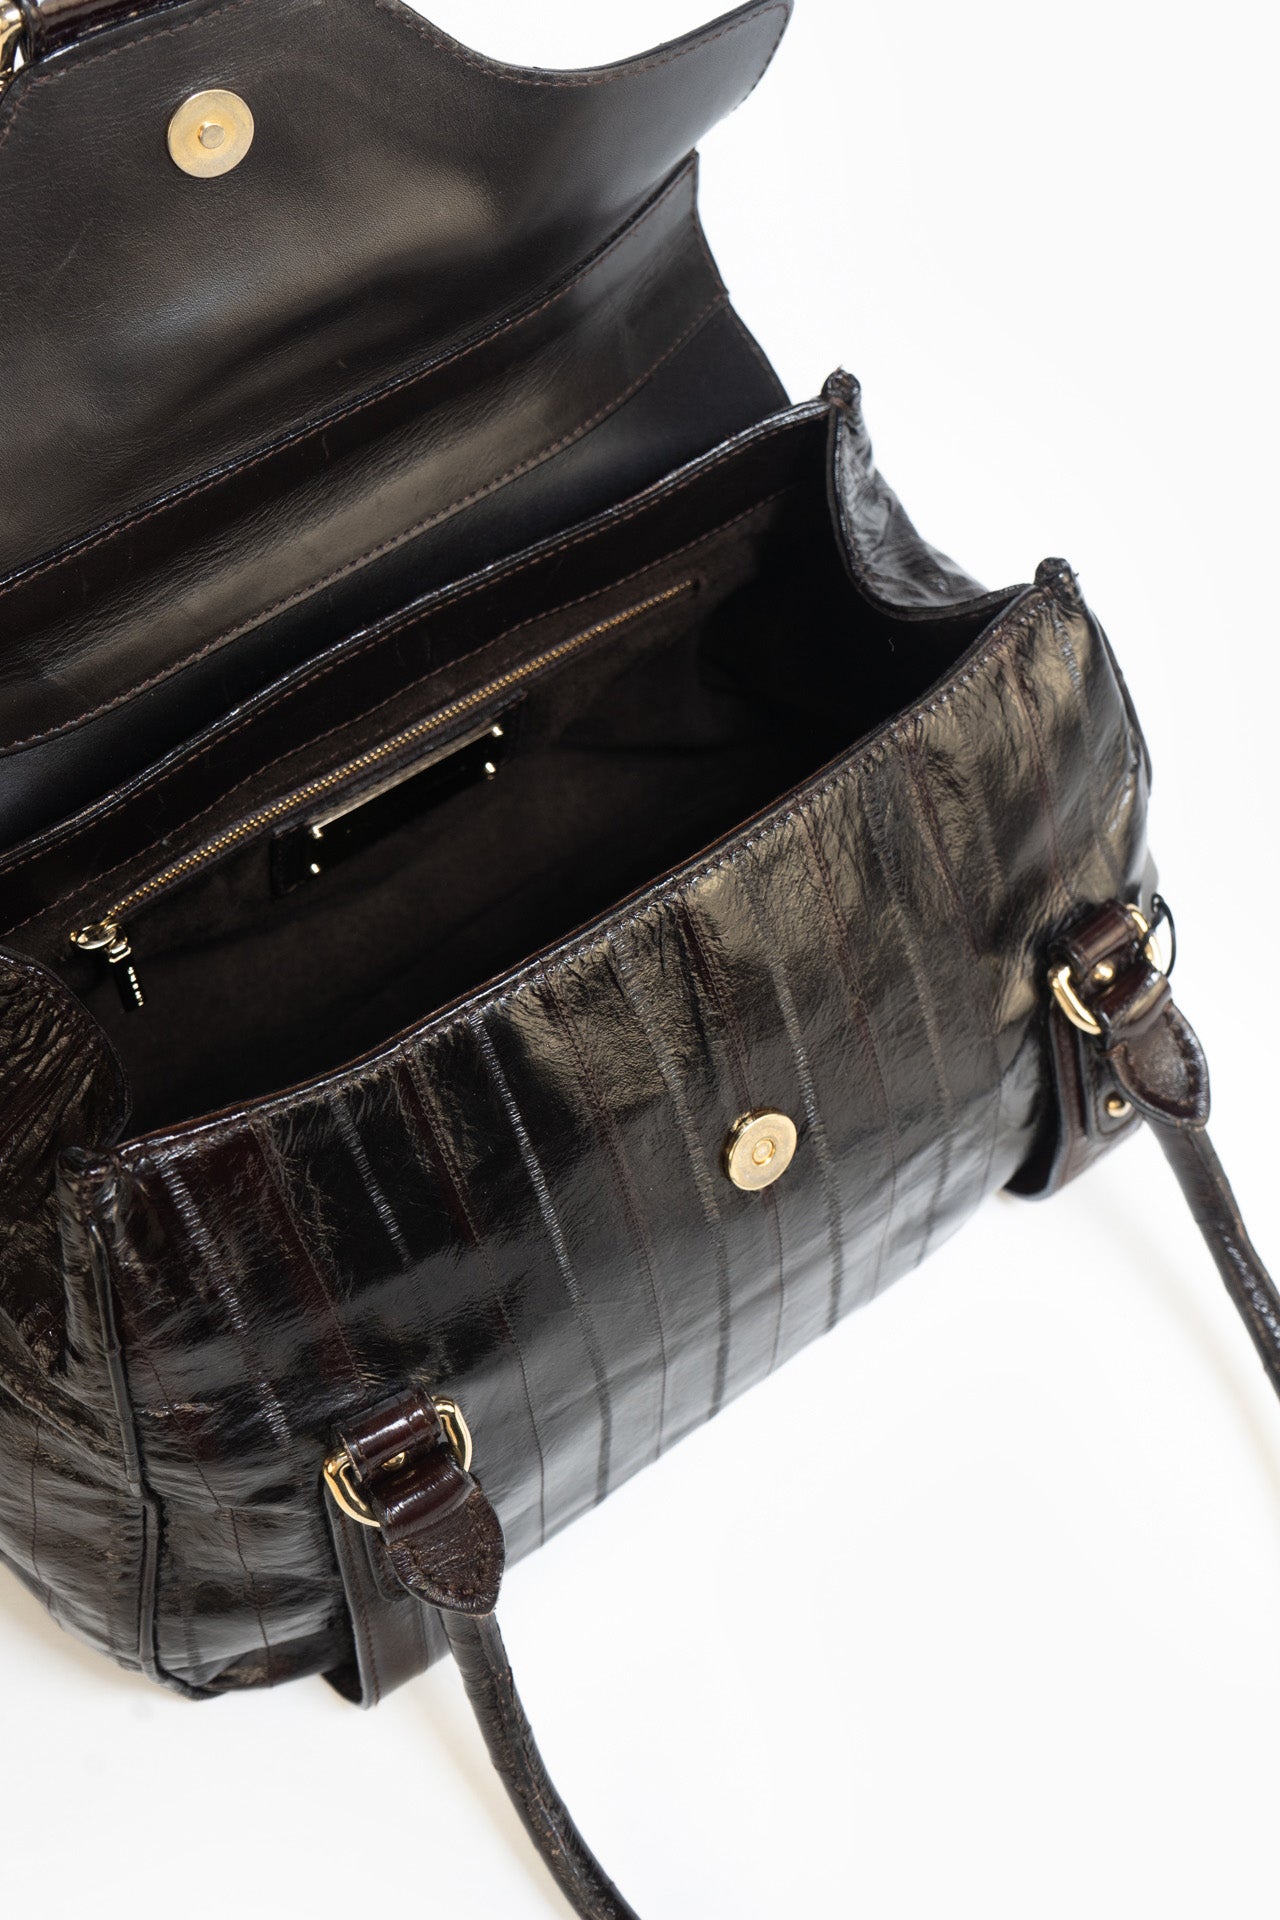 Dolce&Gabbana Leather Burgundy Handbag